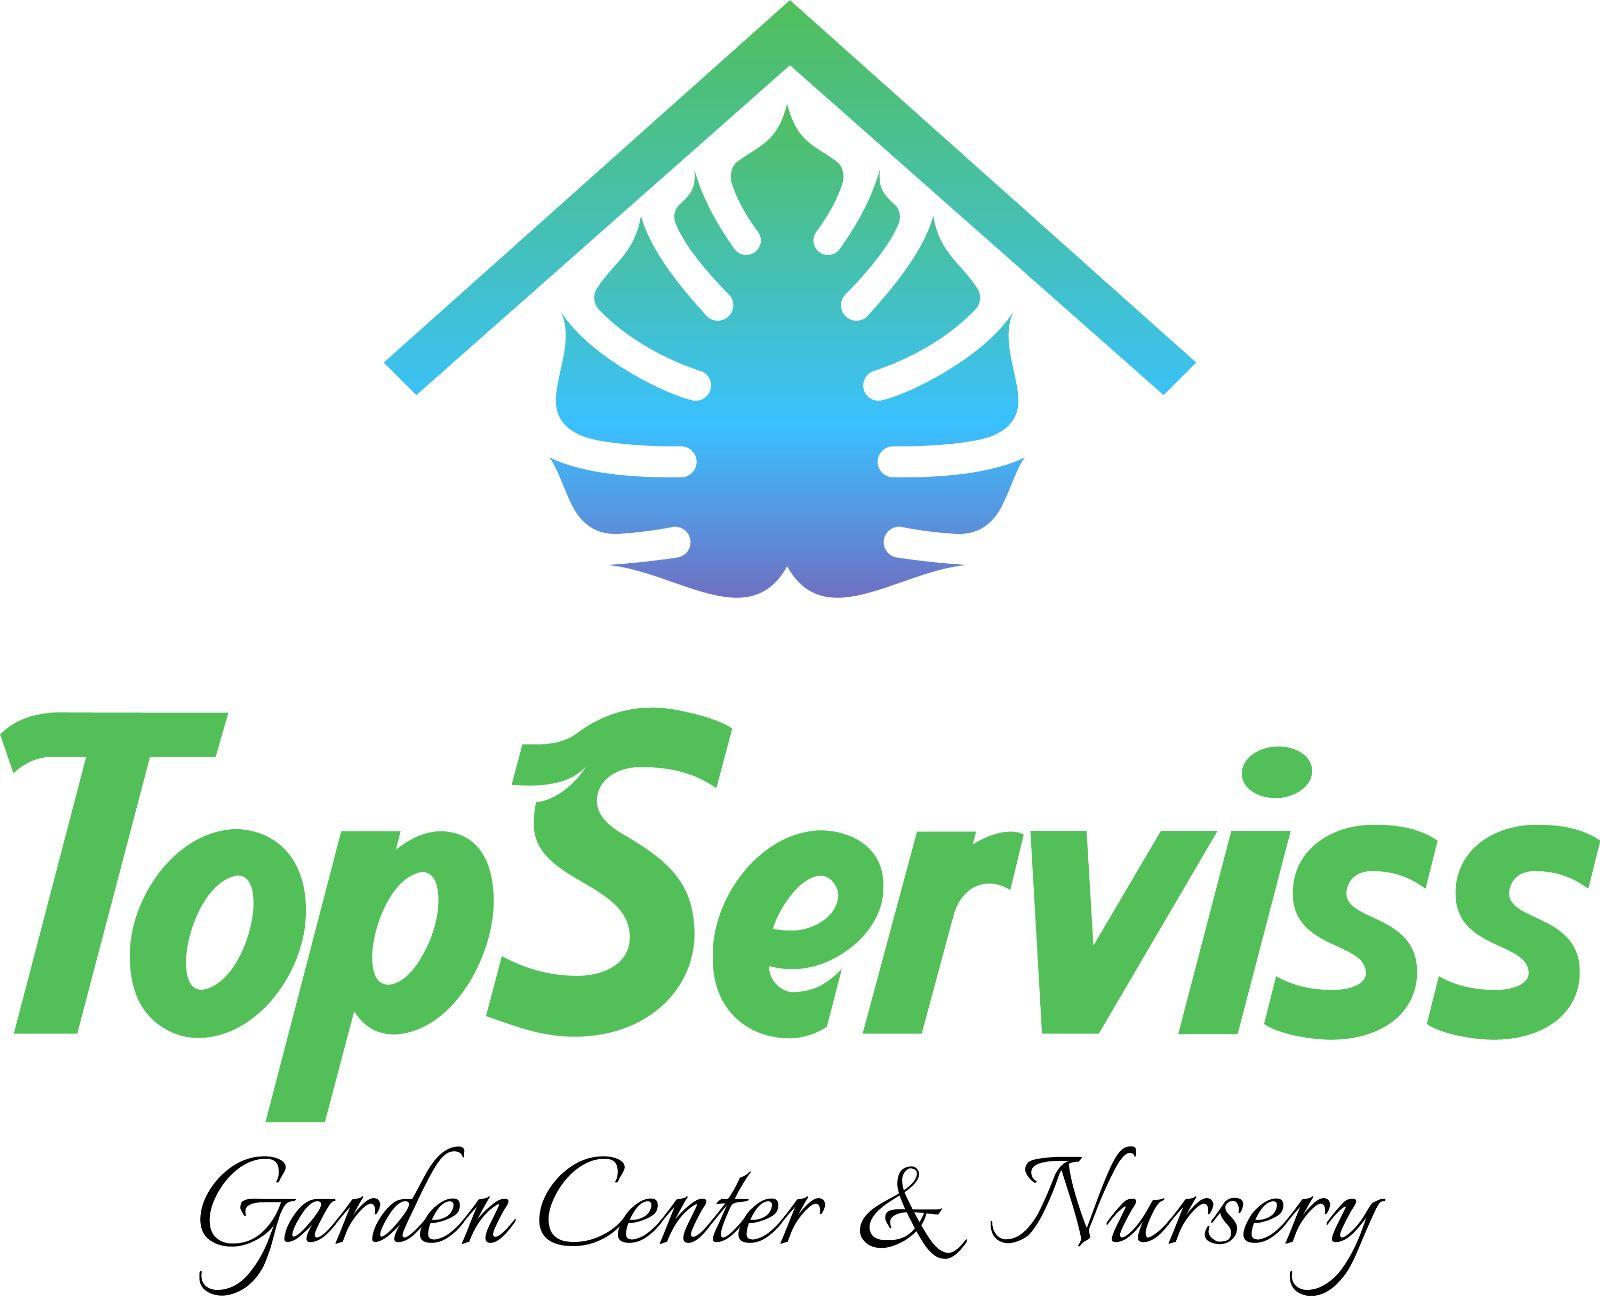 TopServiss Garden Center and Nursery